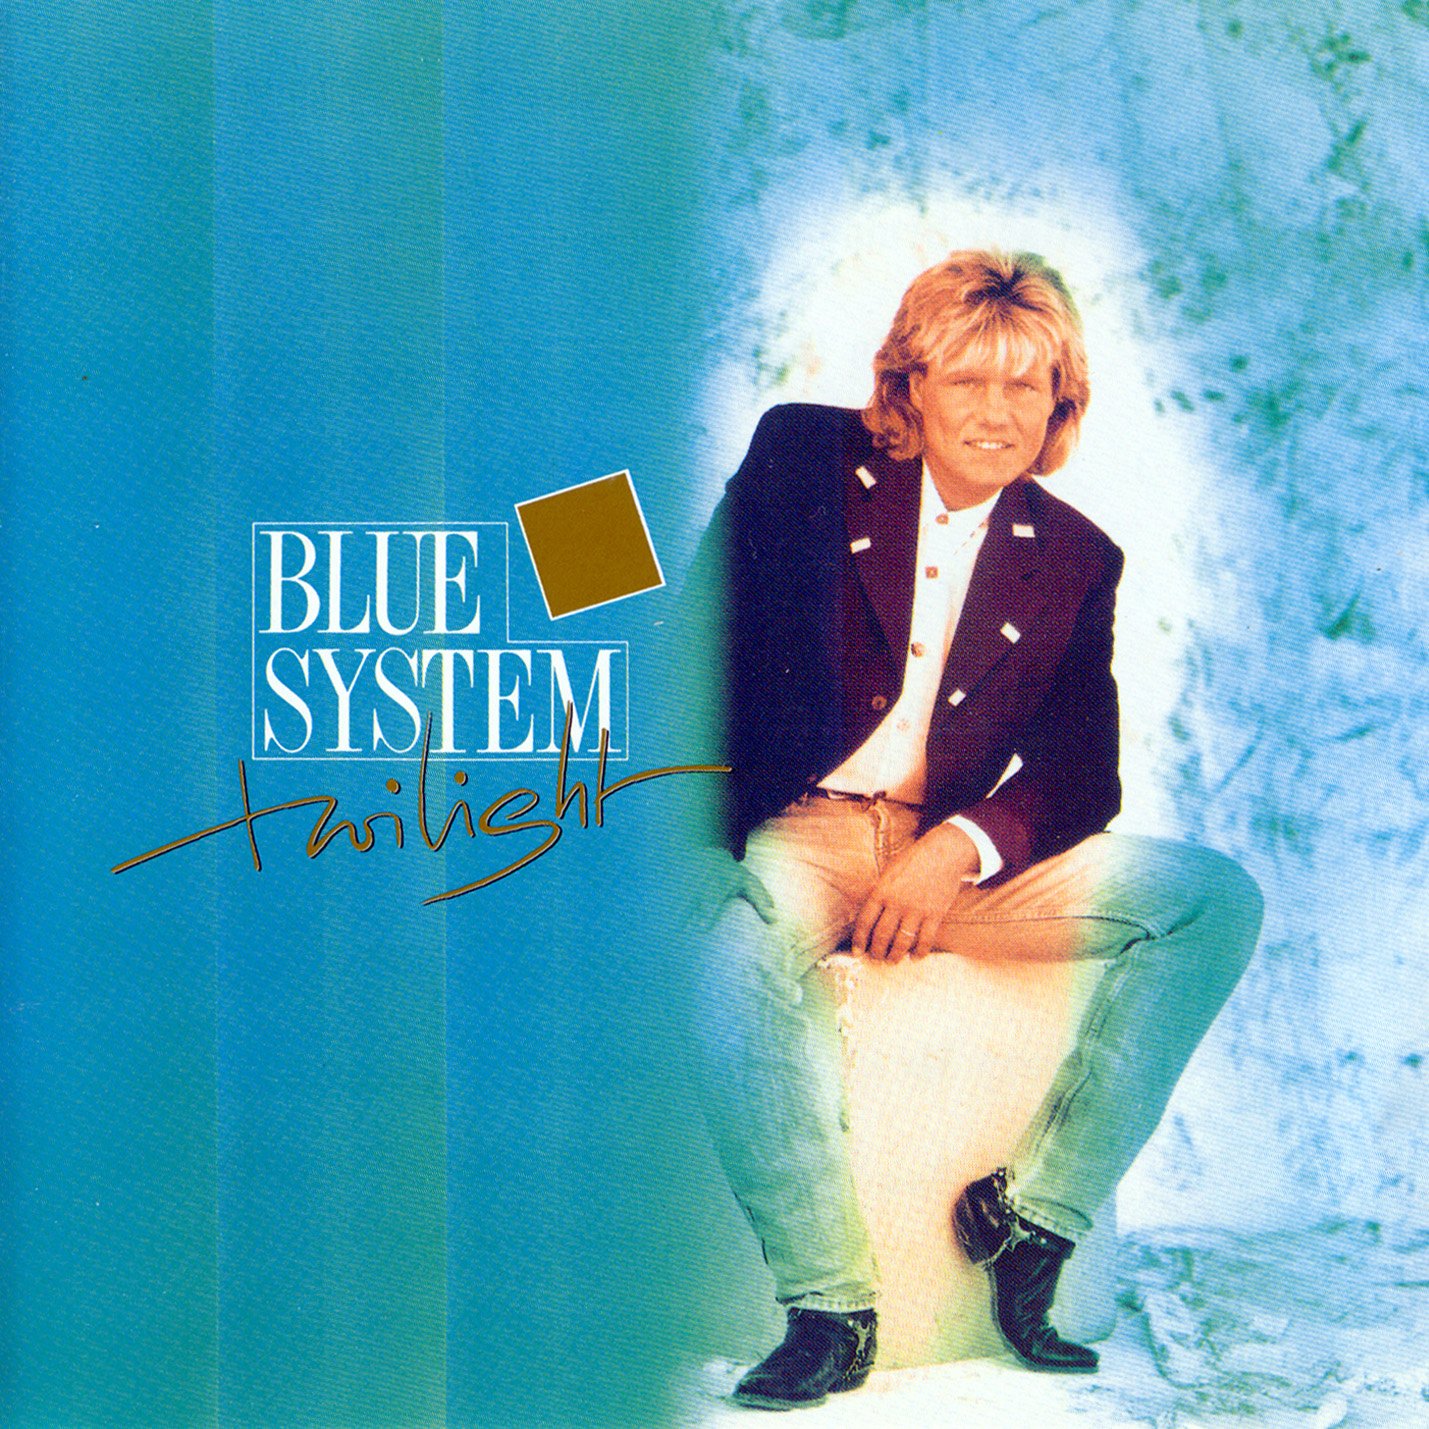  Blue System - Twilight (1989)